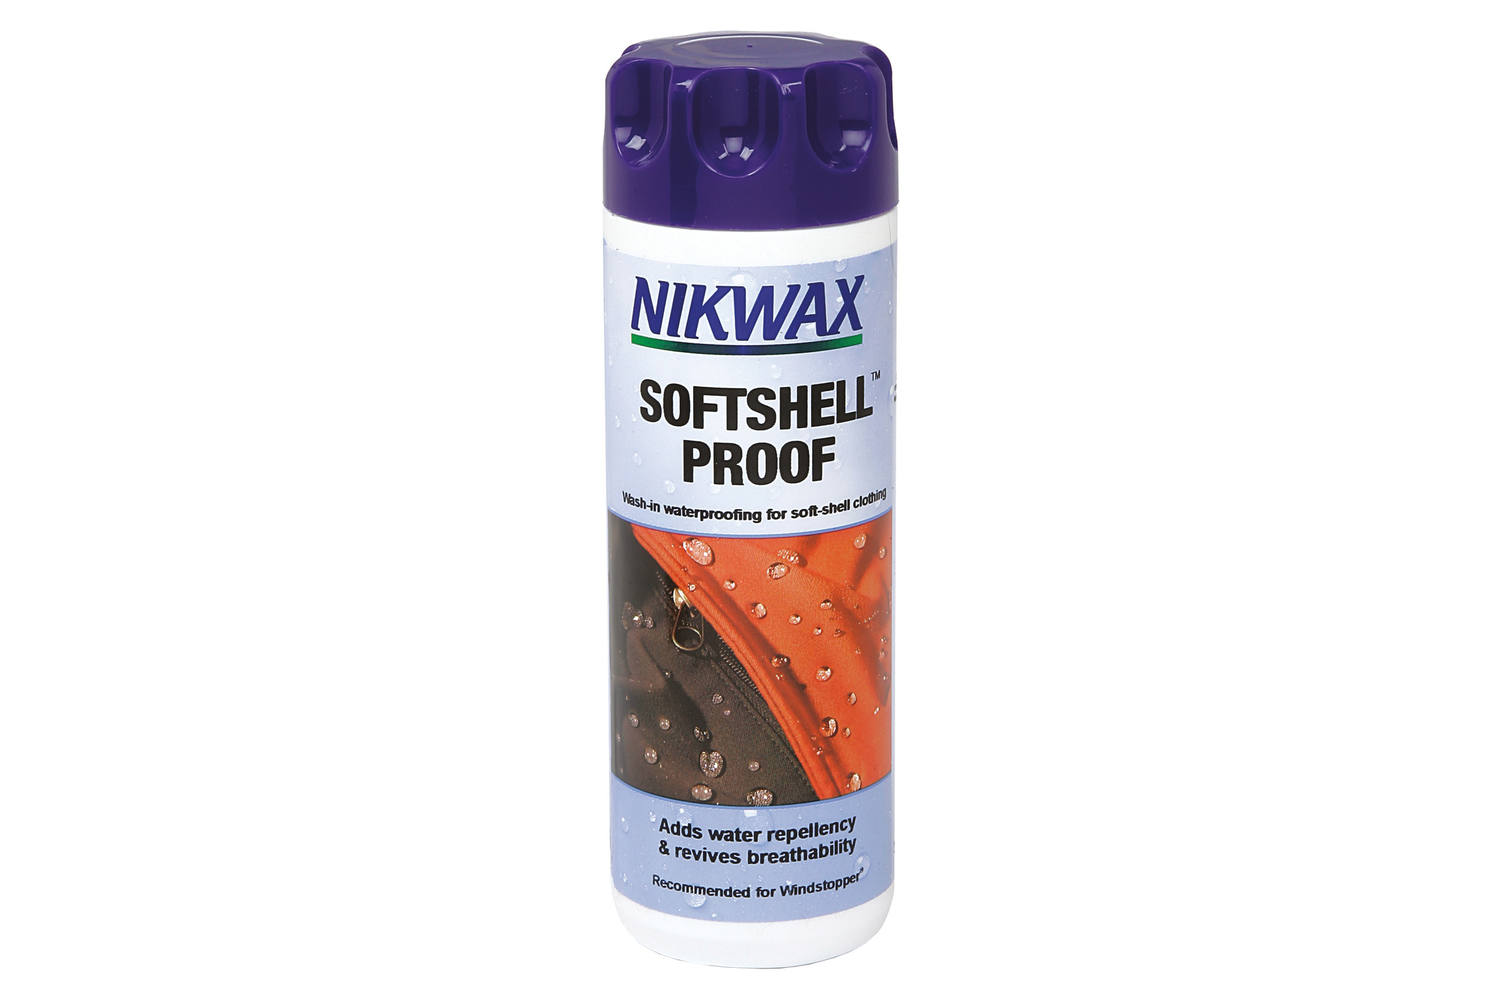 Nikwax Softshell Proof 300ml waterproofing